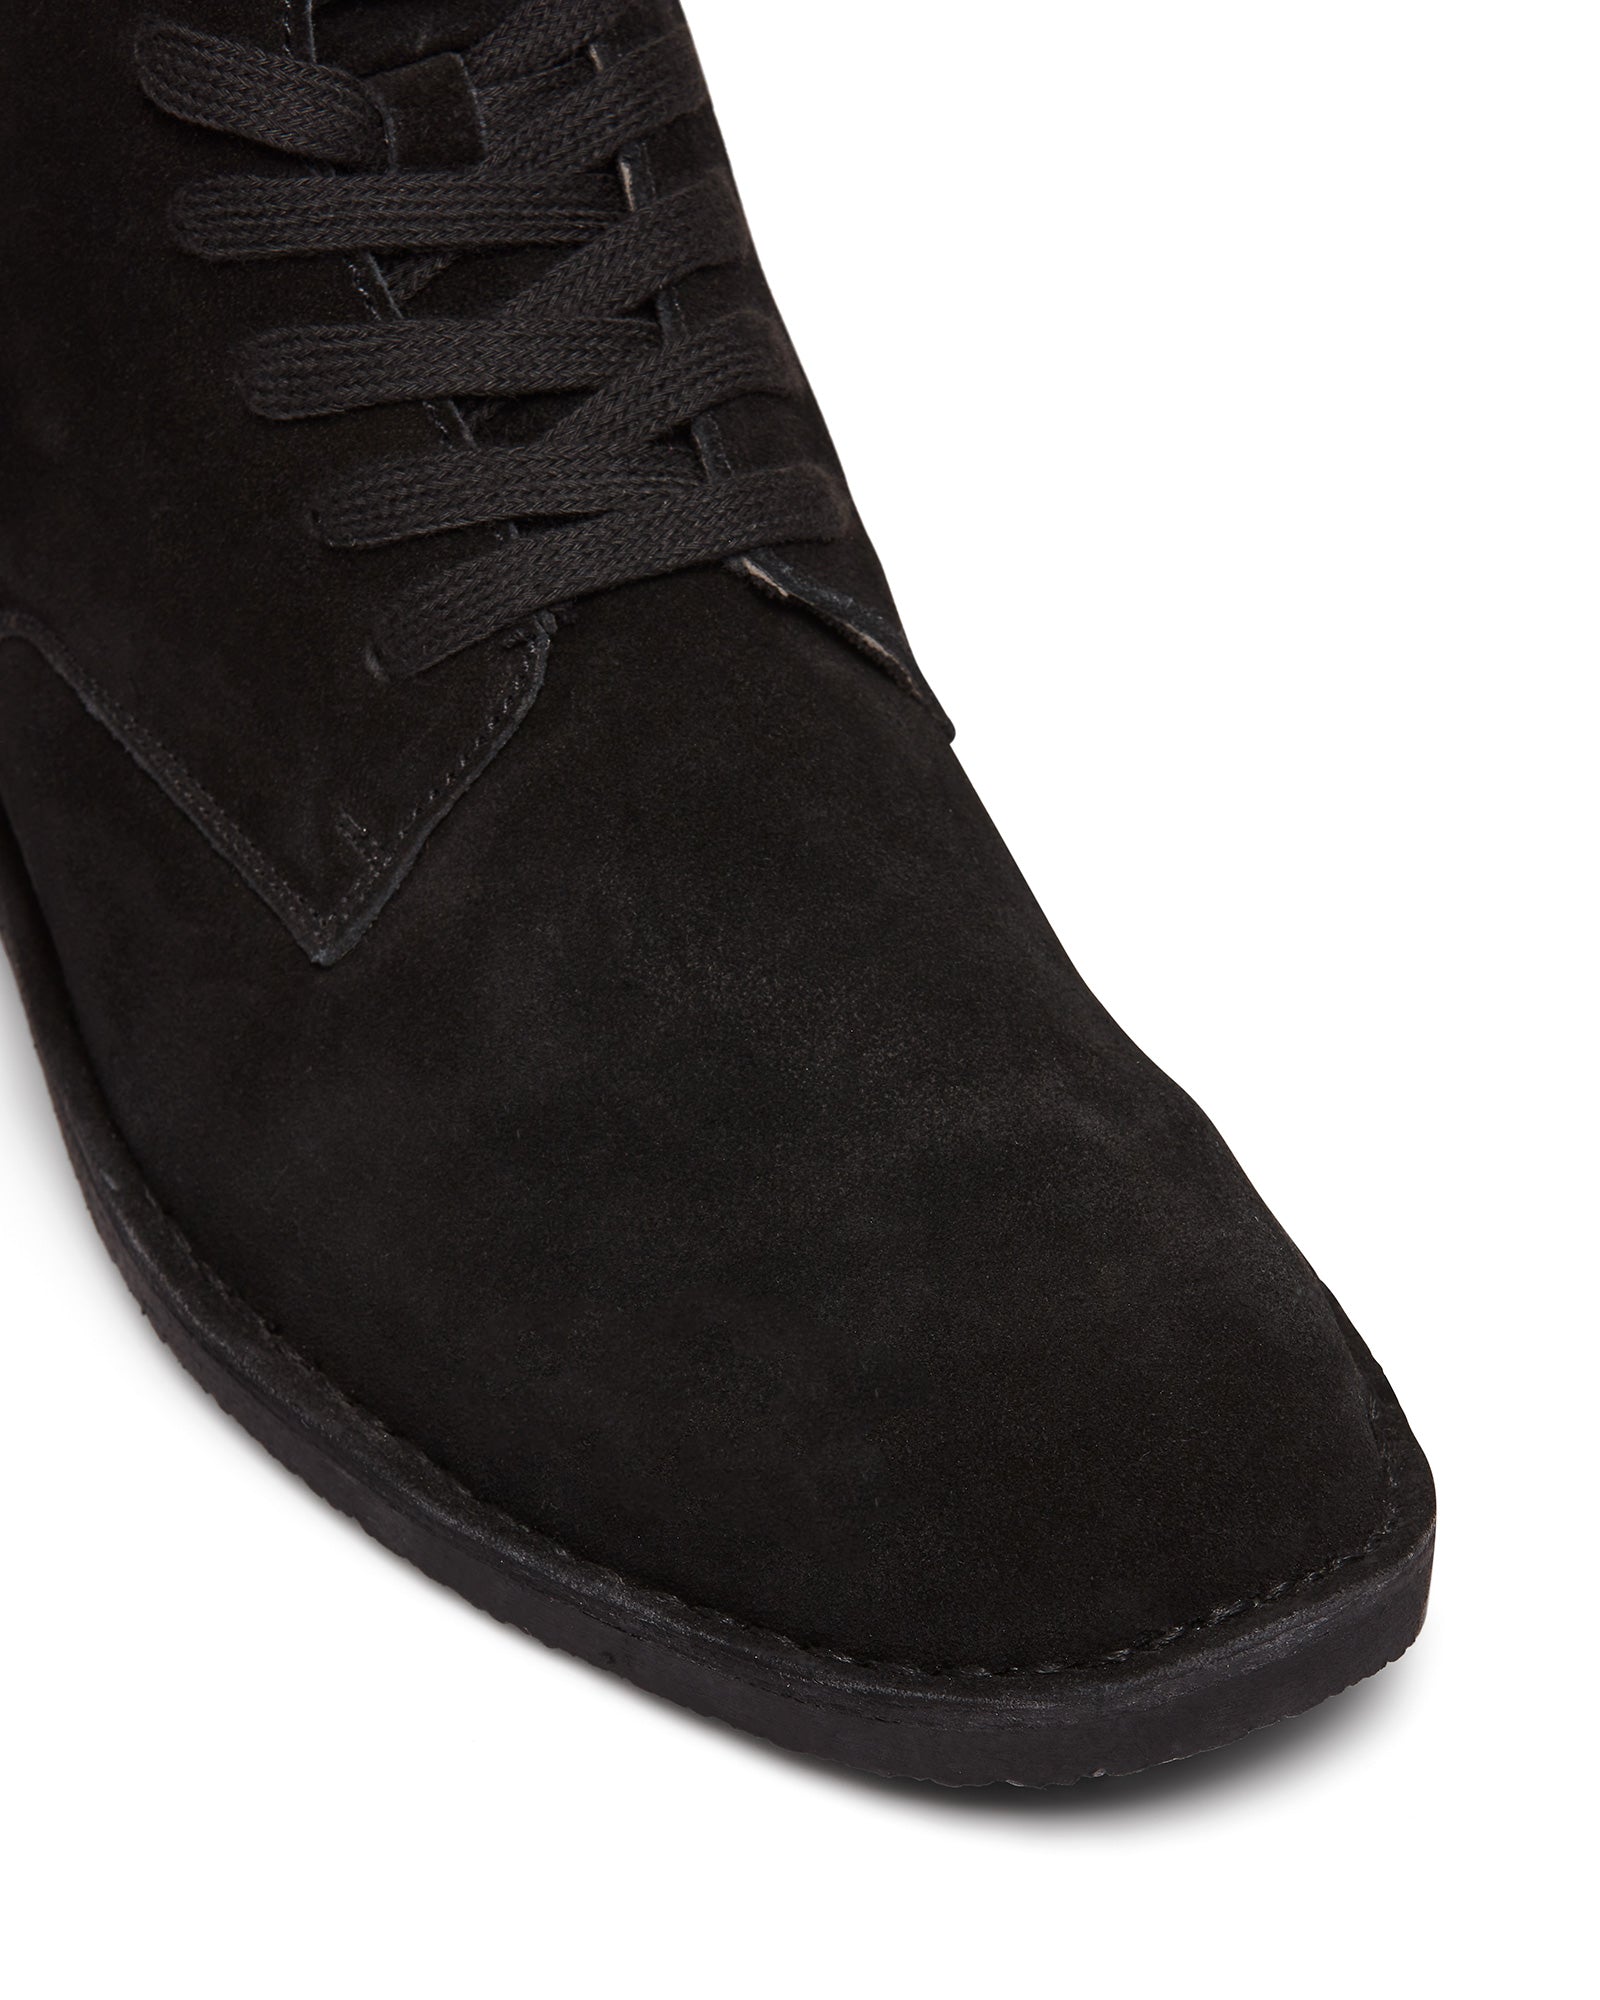 Uncut Shoes Keystone Black | Men's Leather Boot | Desert Boot | Lace Up